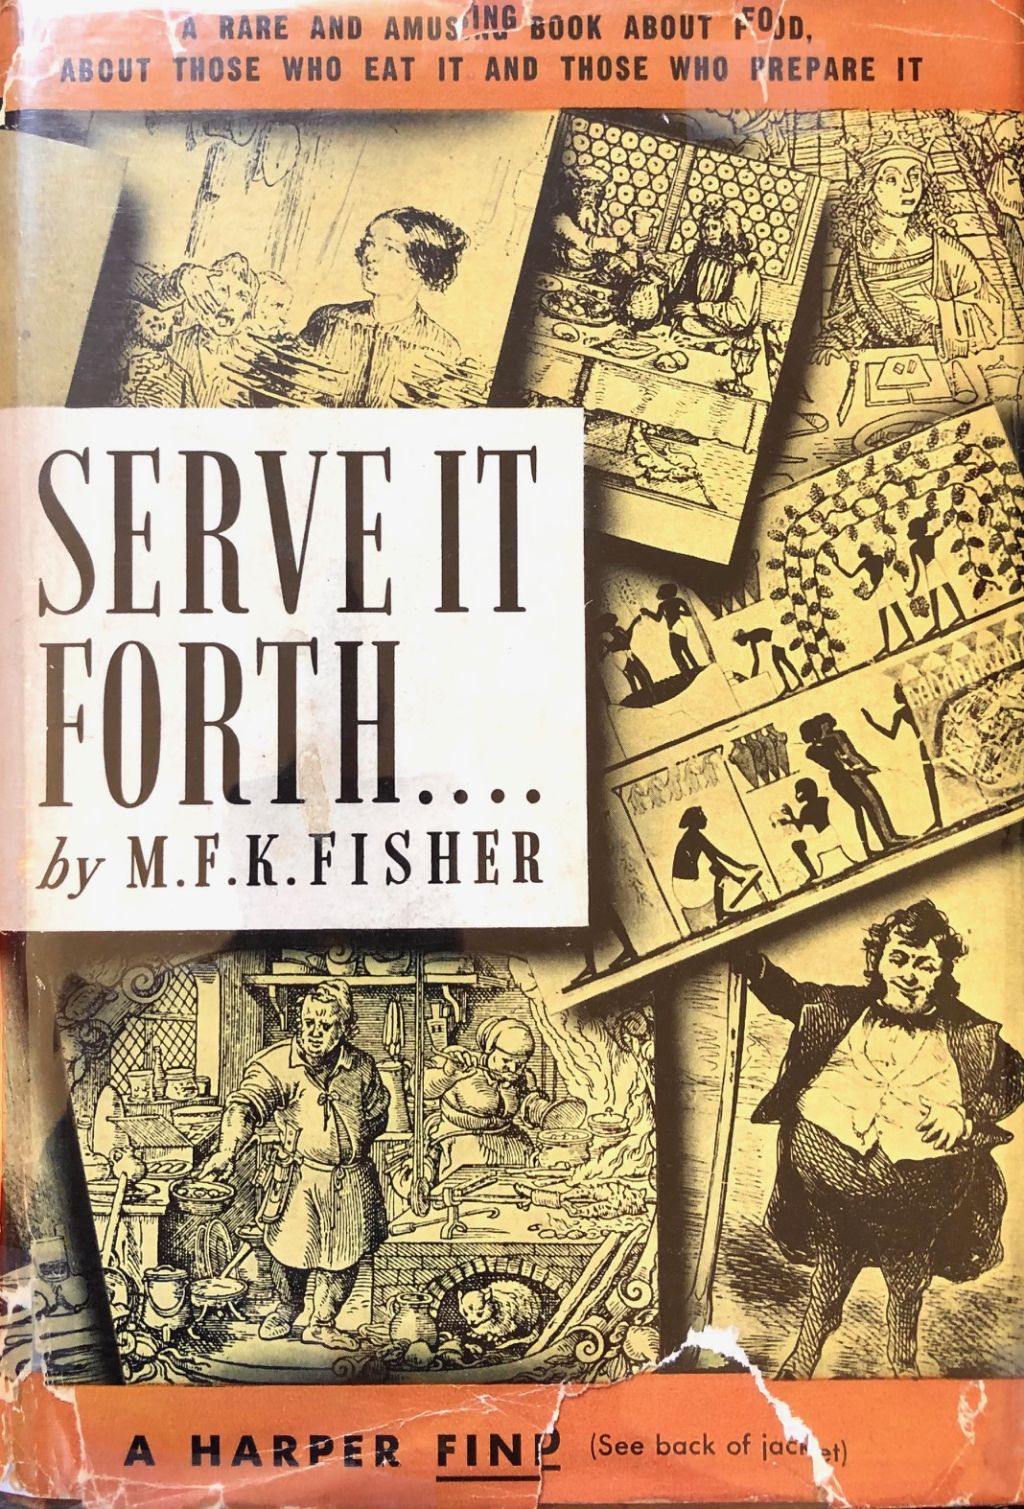 (*NEW ARRIVAL*) (Food Writing) Fisher, M.F.K. Serve it Forth.